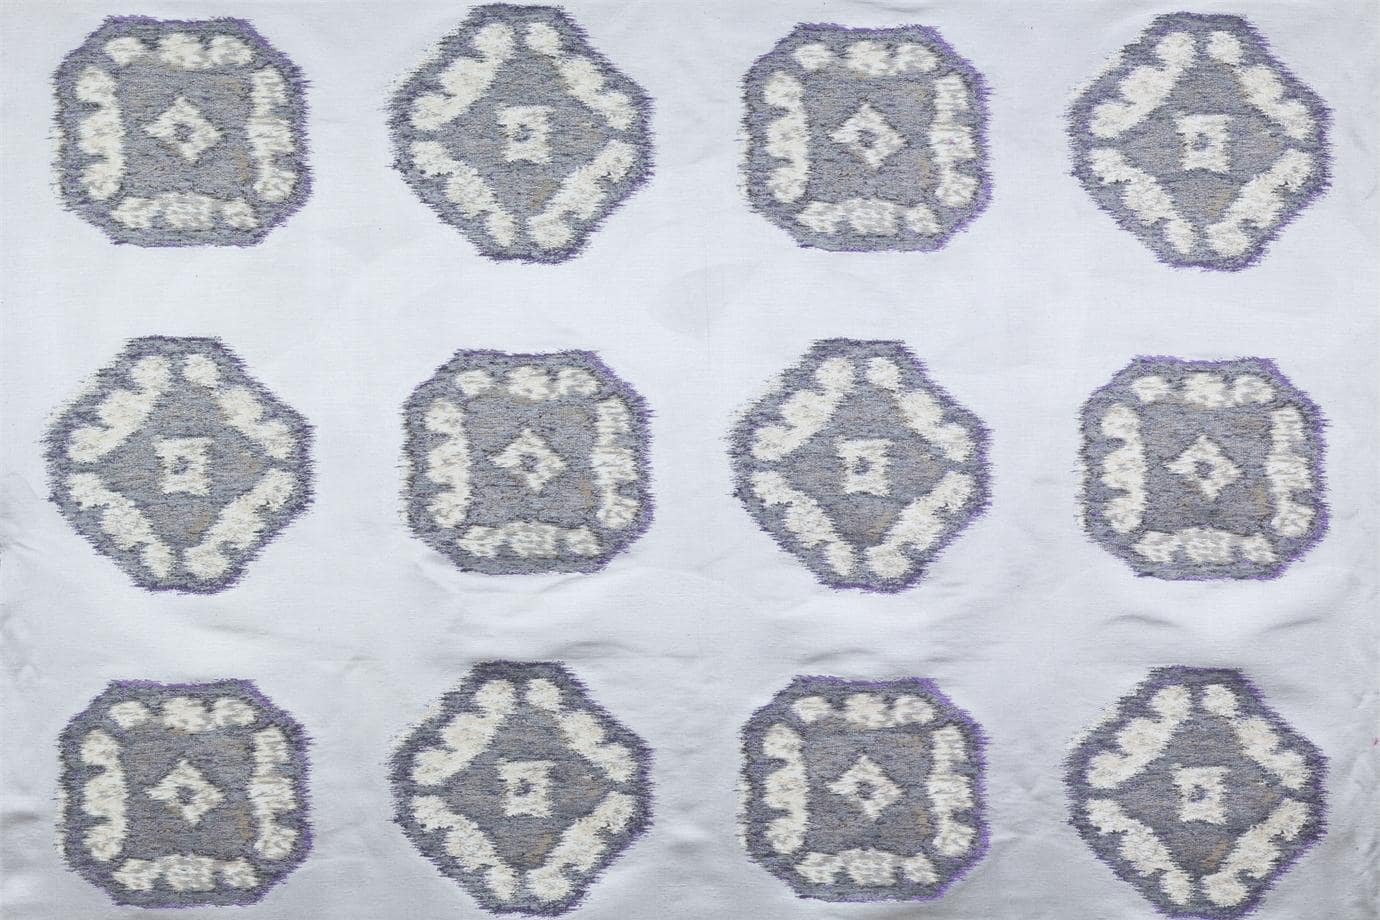 J2832 RIGHETTA 002 Bianco beije home decoration fabric